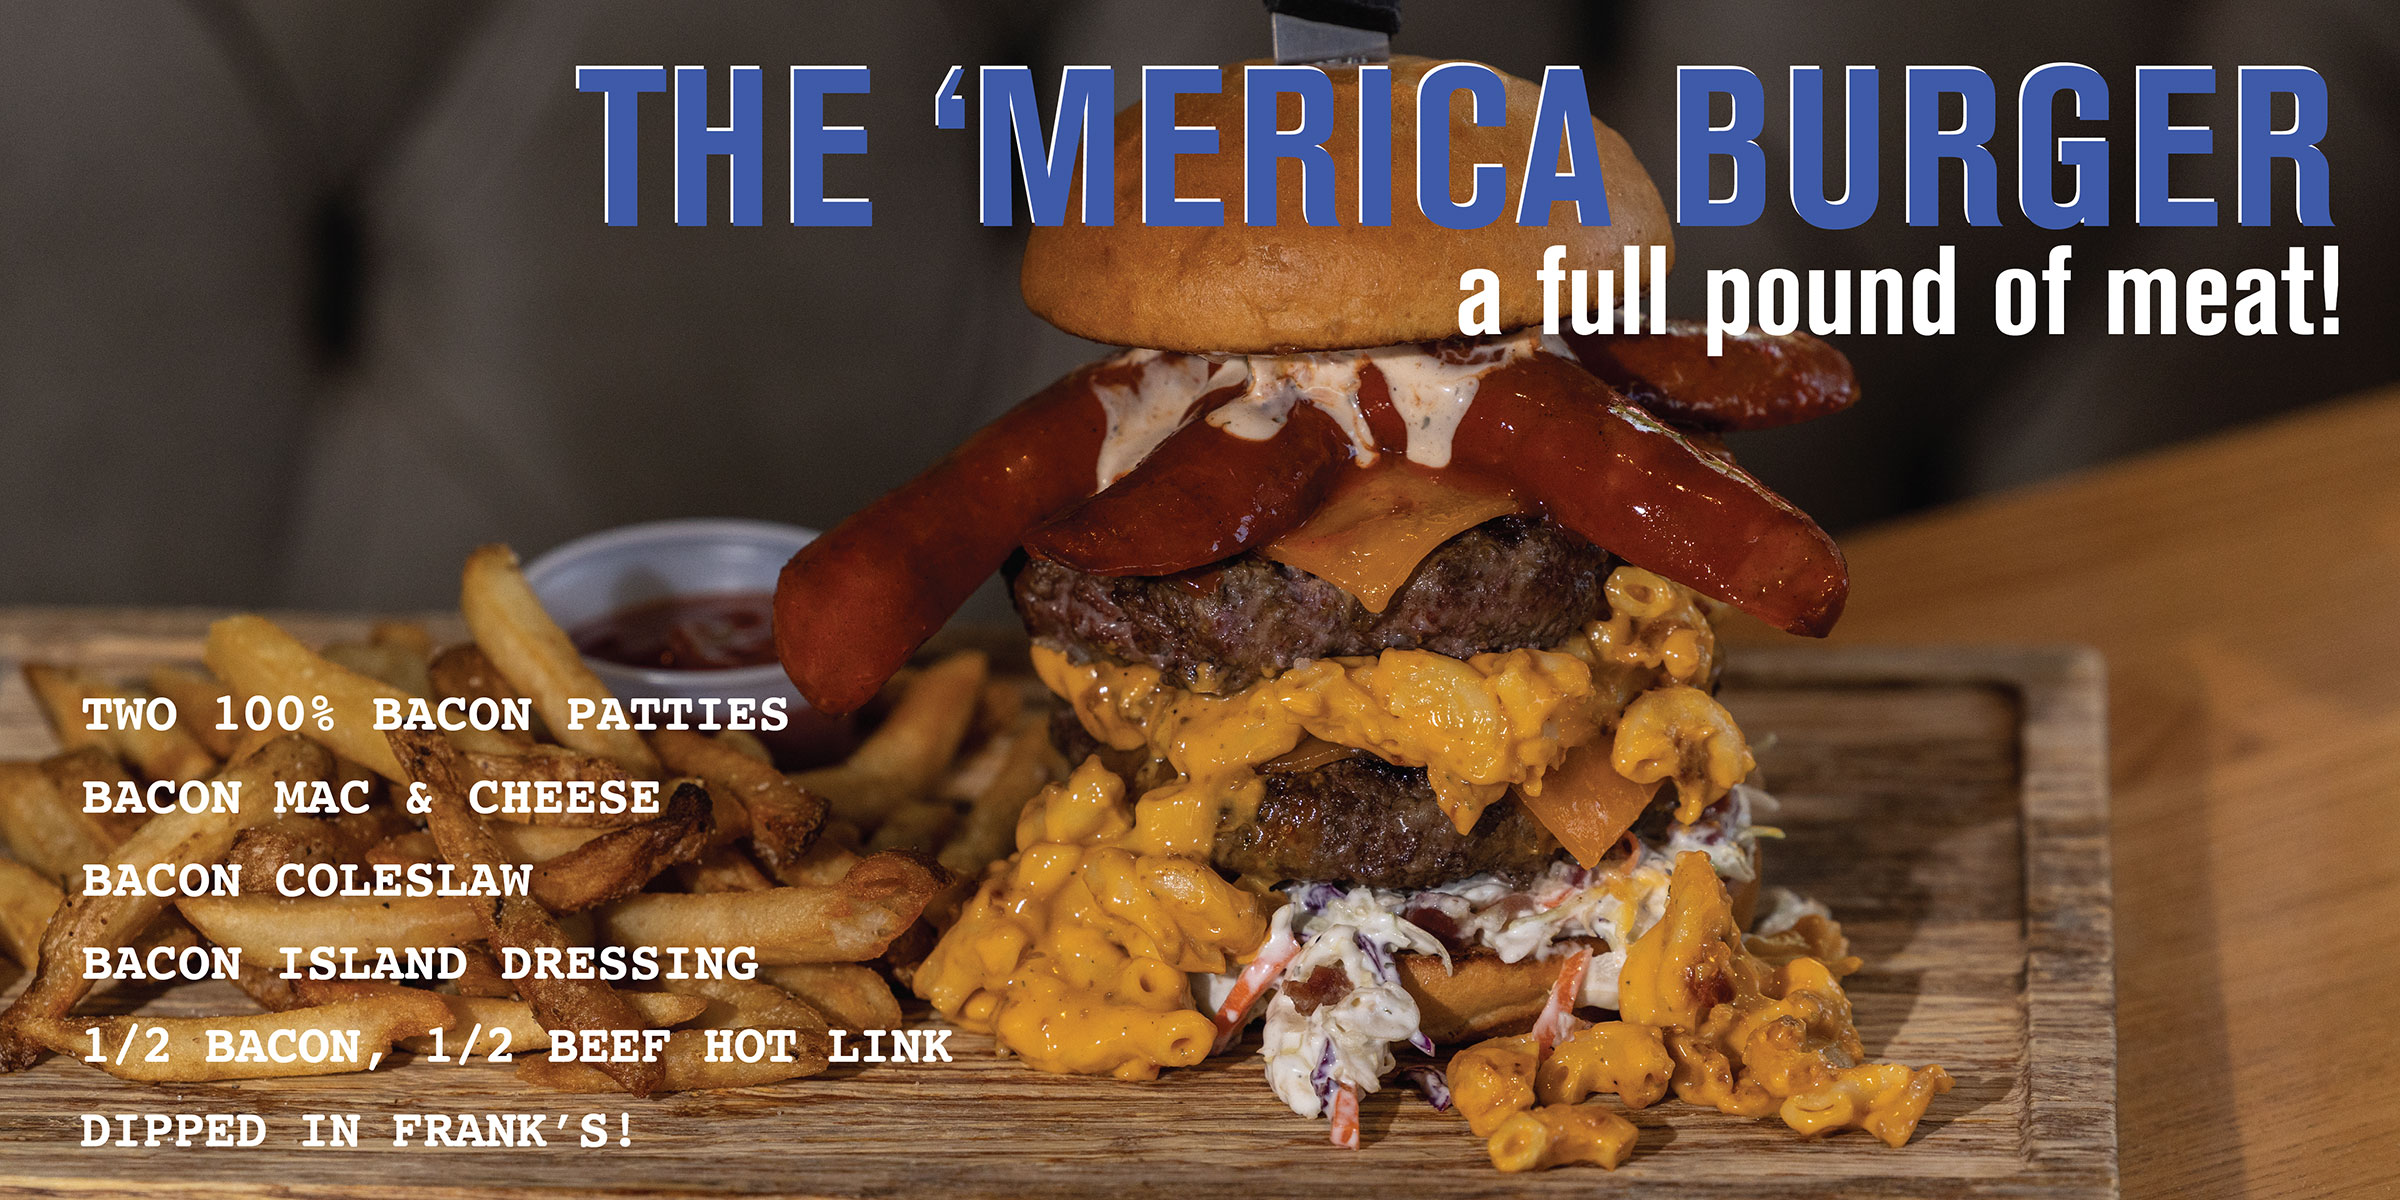 The Merica Burger